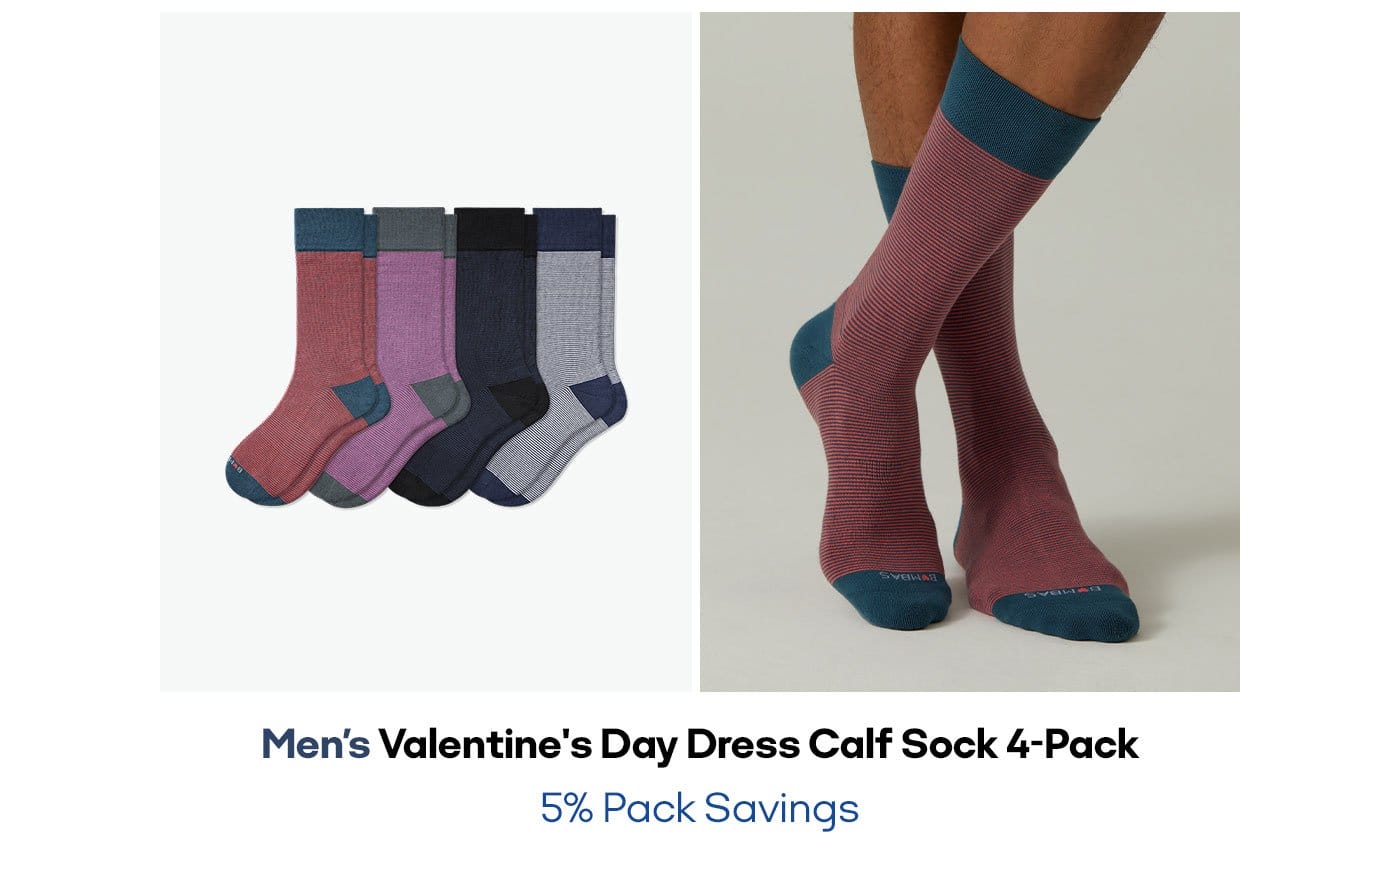 Men's Valentine's Day Dress Calf Sock 4-Pack